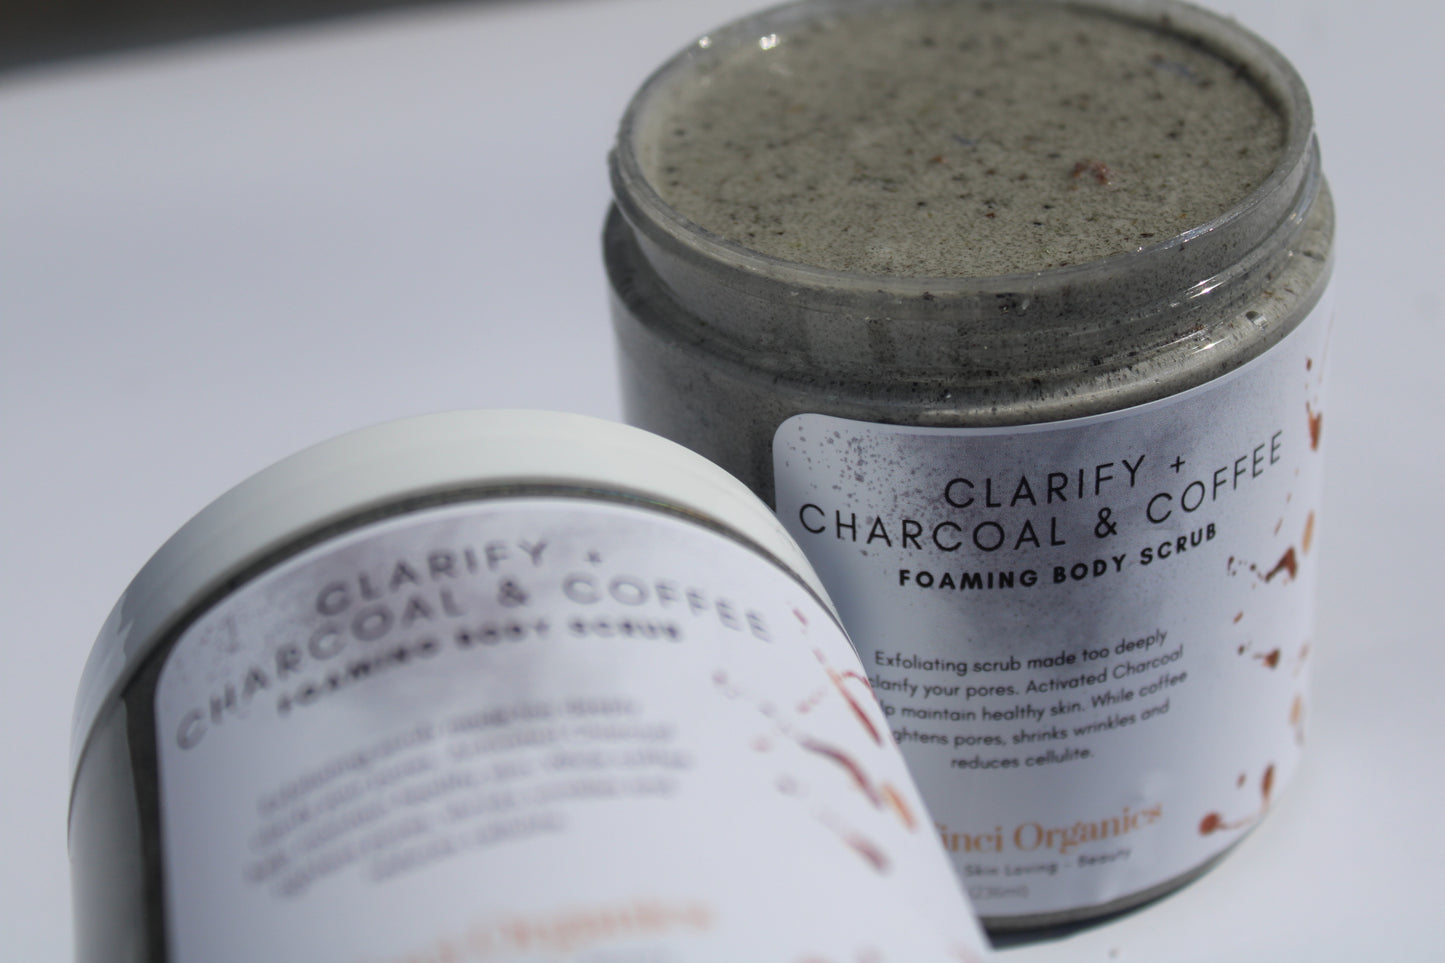 Clarify + Charcoal & Coffee - La Vinci’s